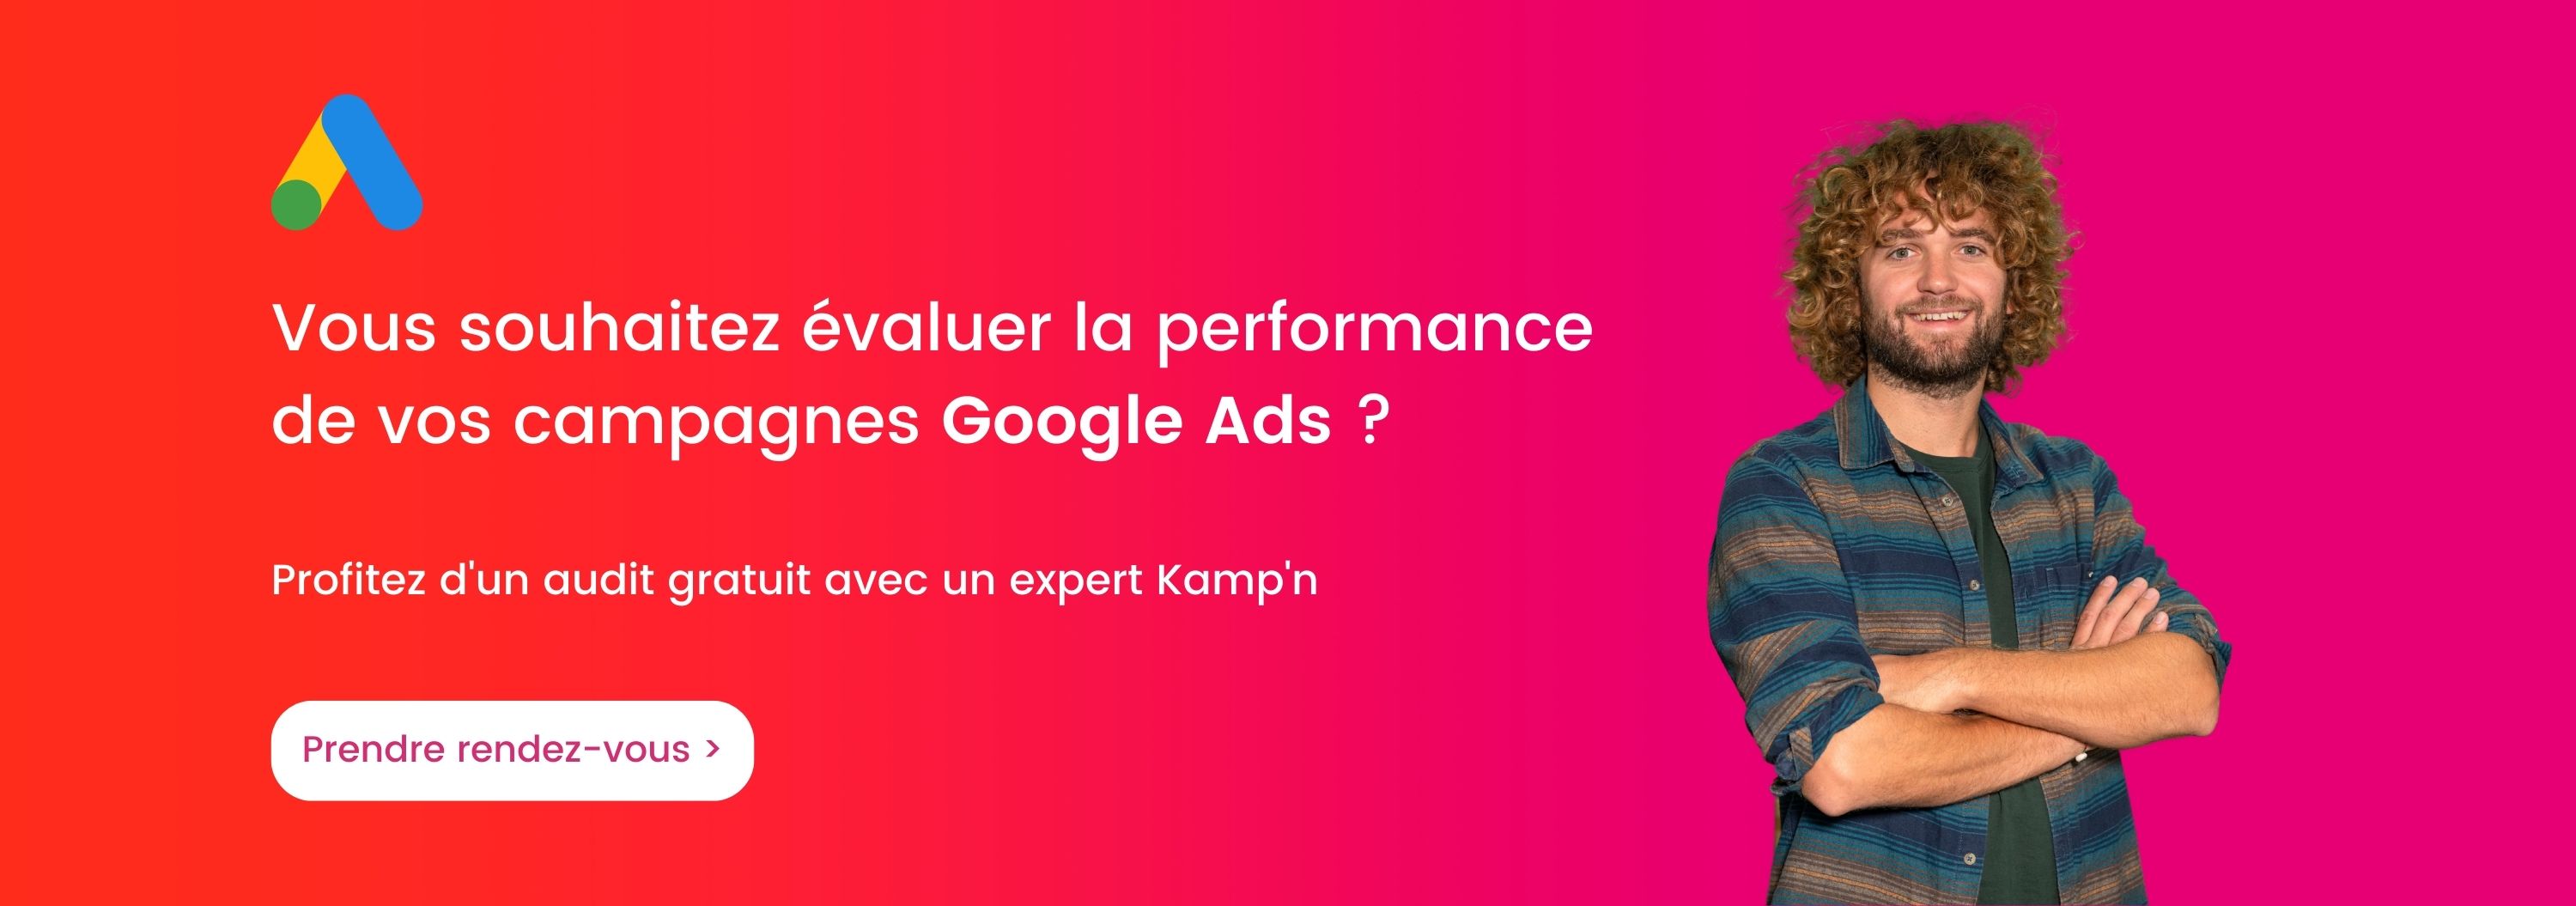 Agence Google ads